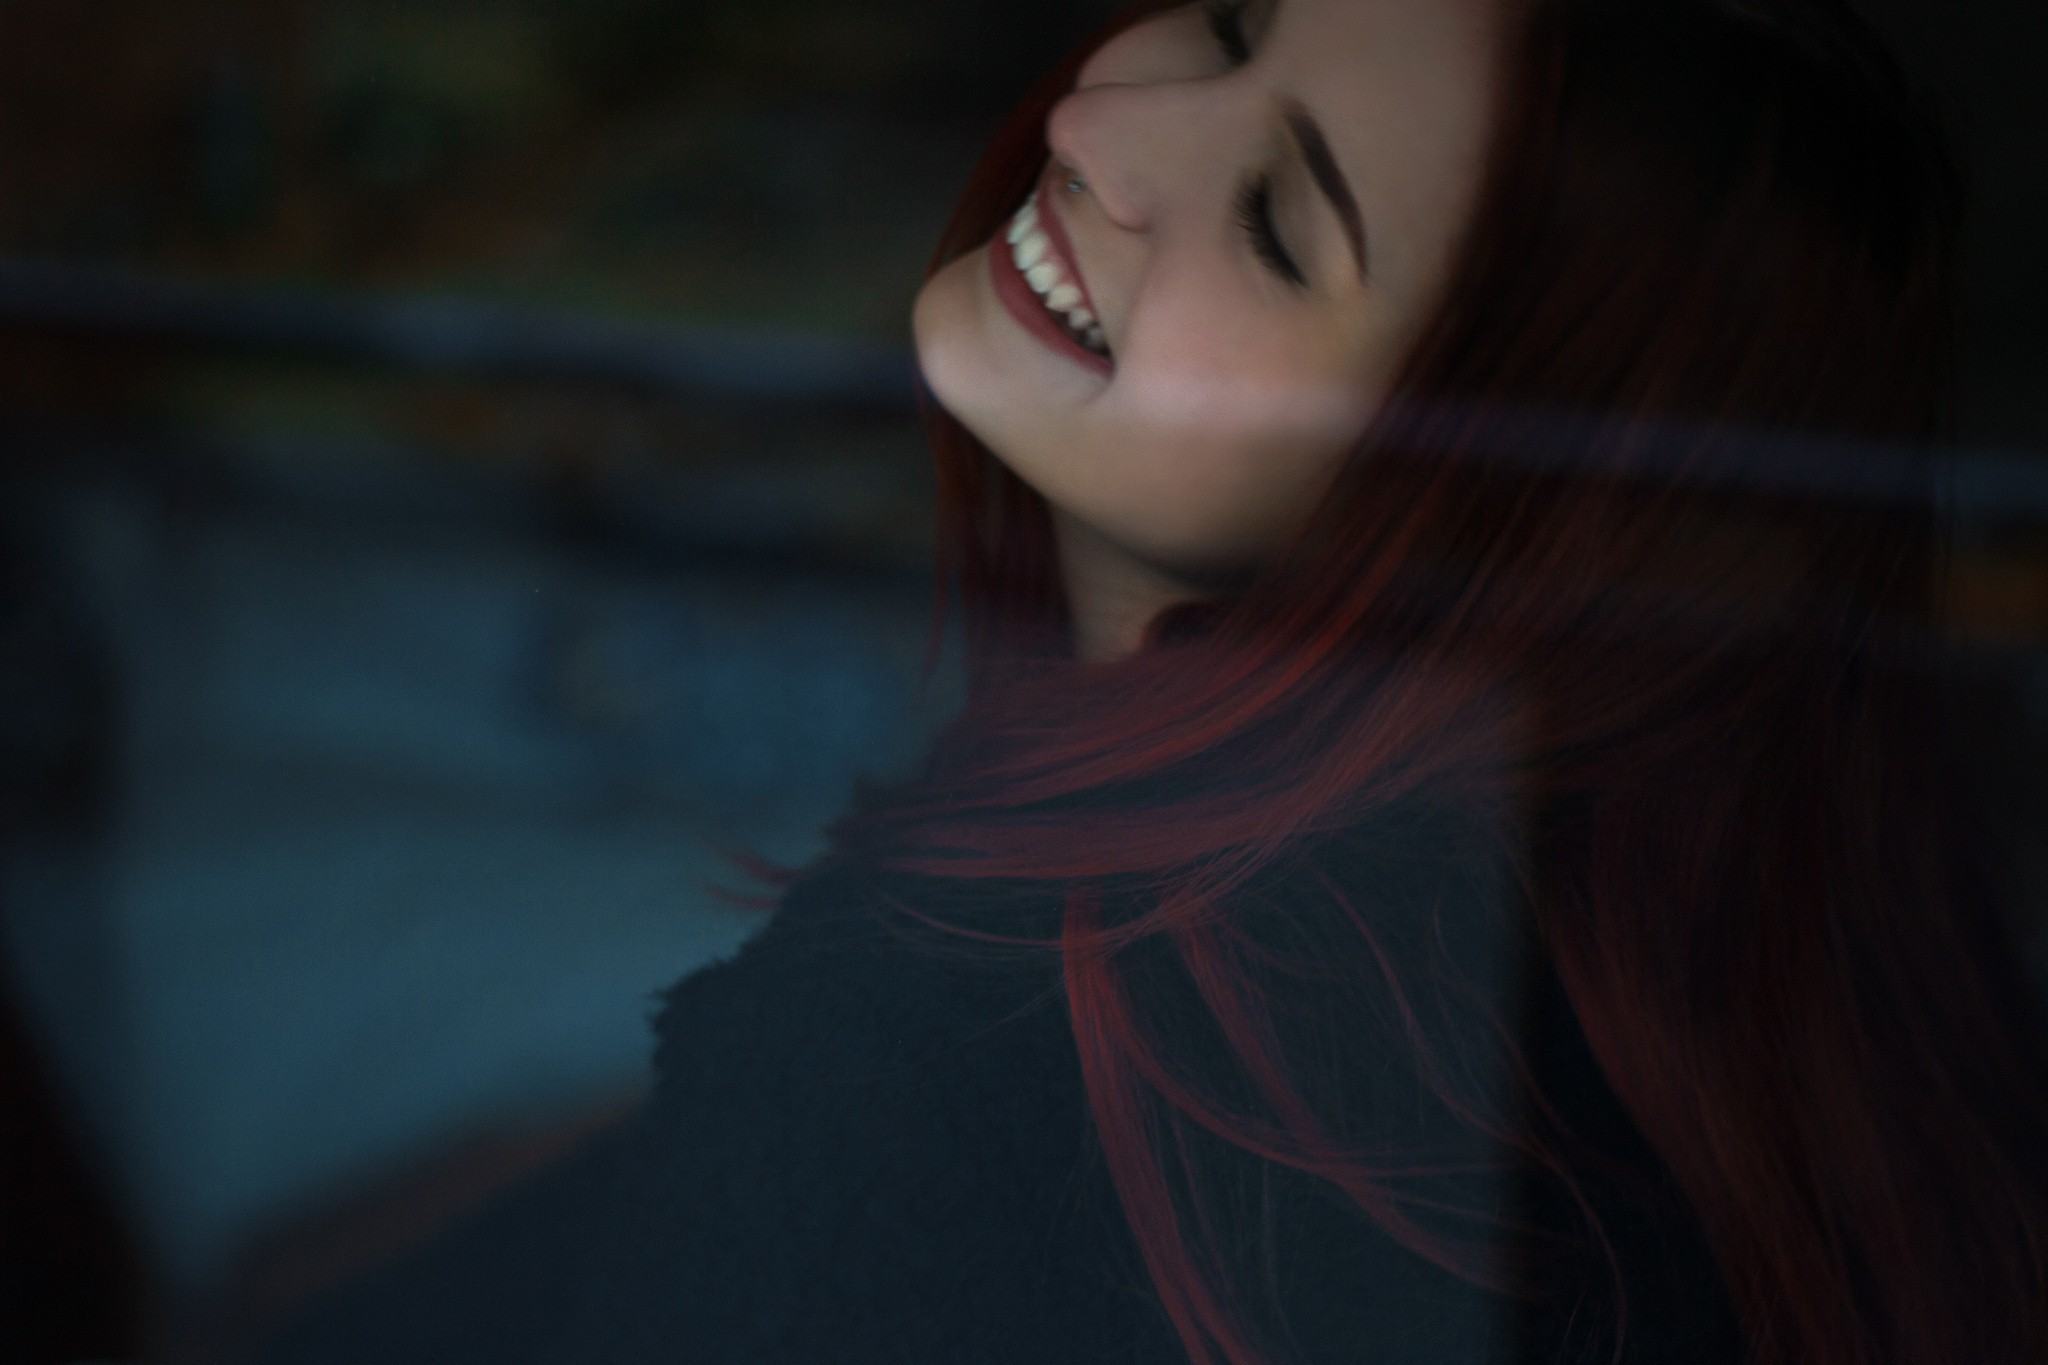 women, Redhead, Pierced Nose, Smiling Wallpaper